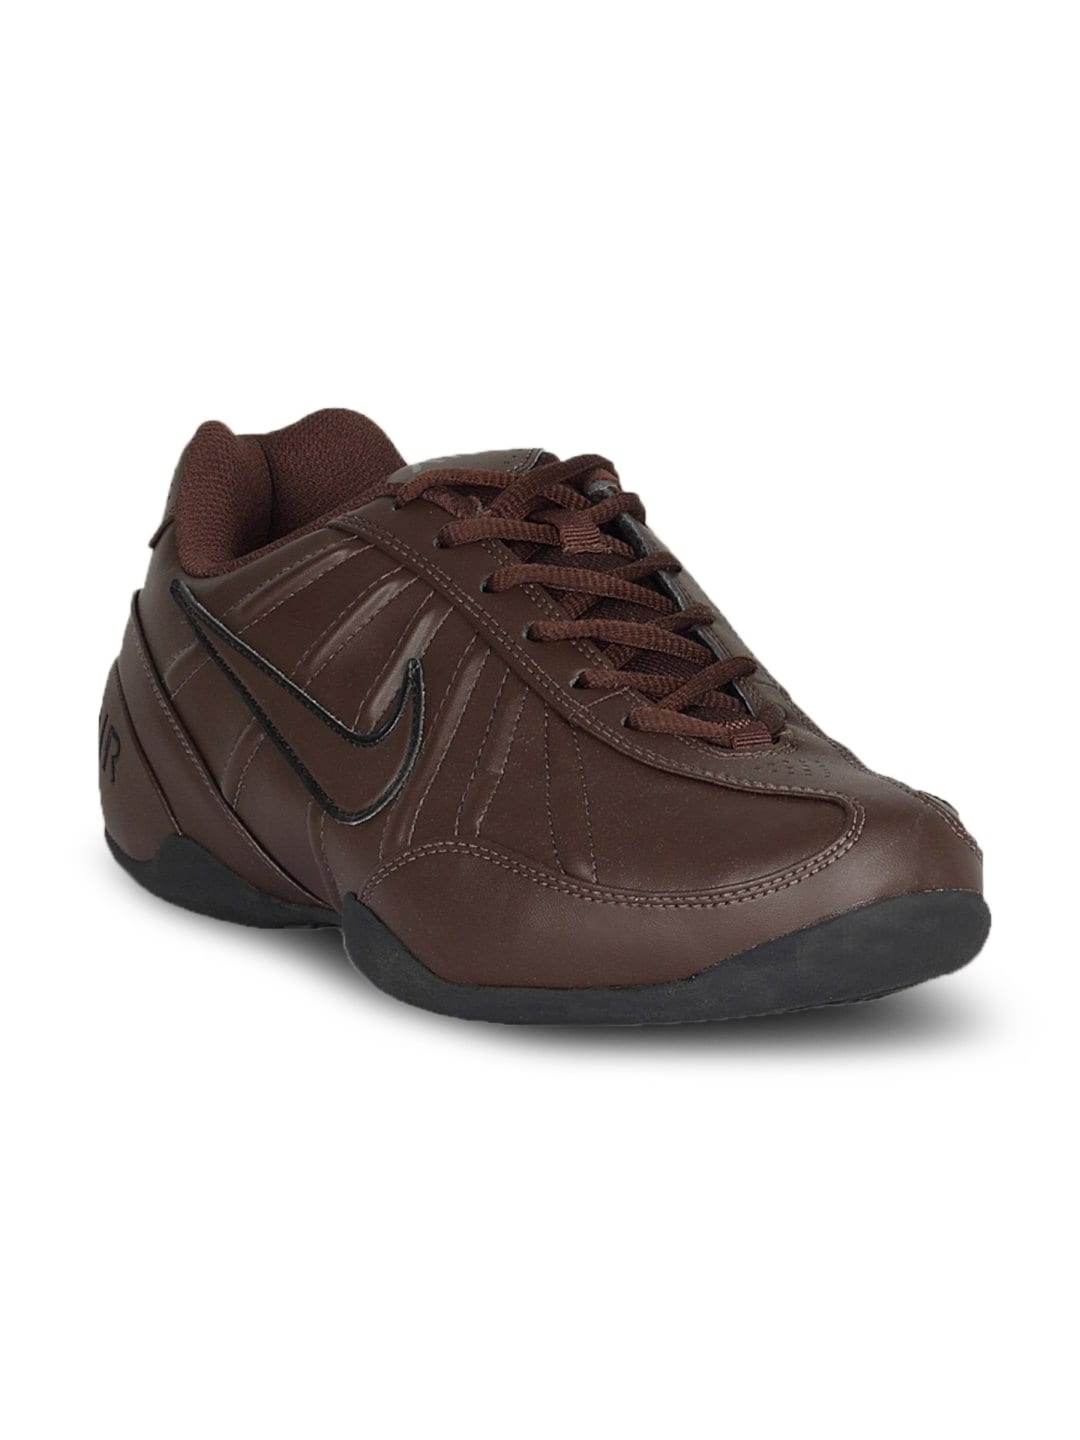 Nike Men's Air Endurance Brown Shoe